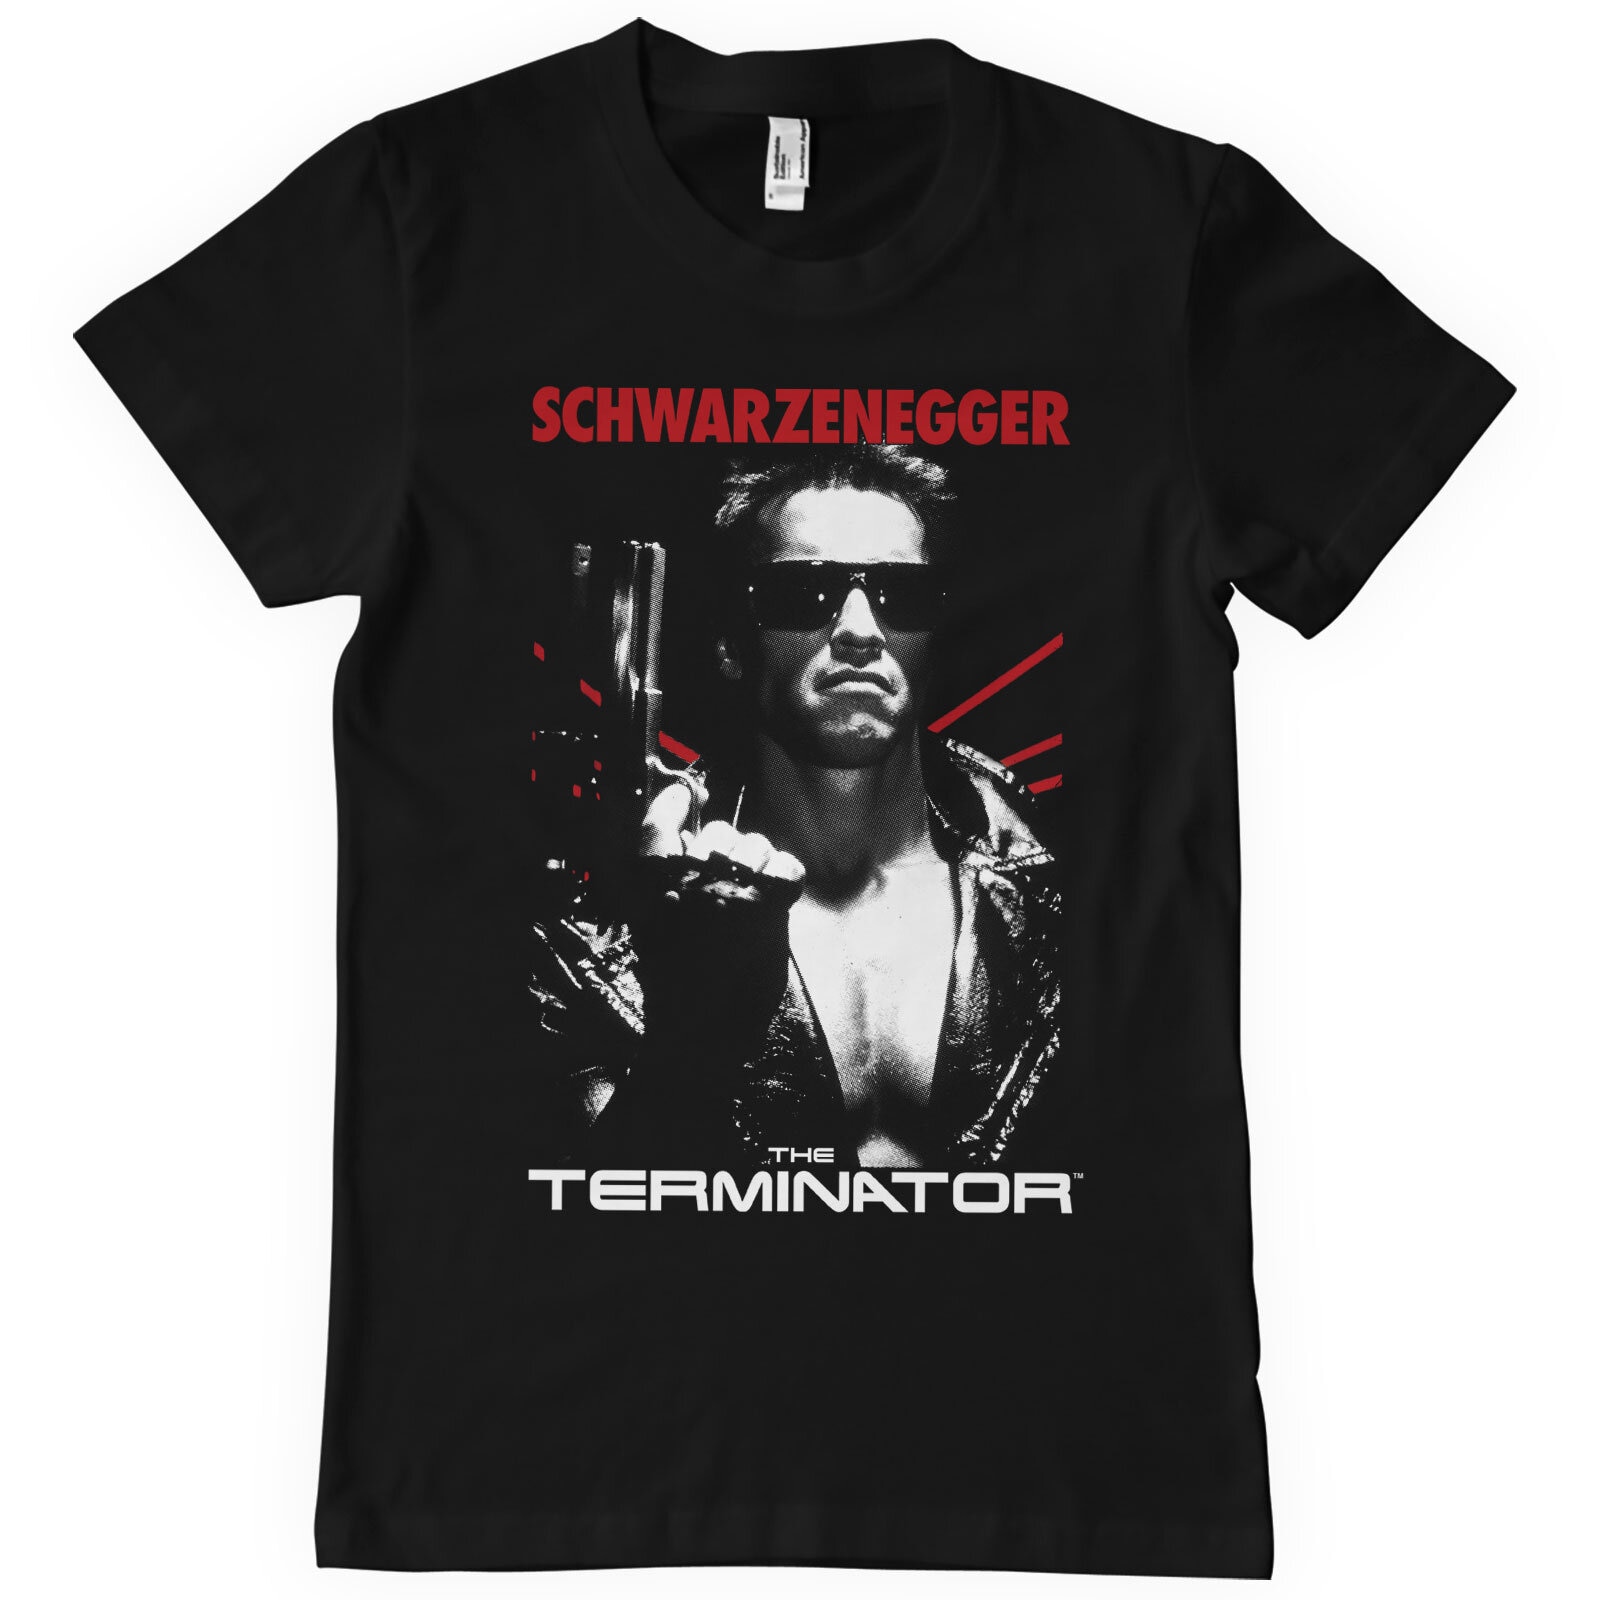 The Terminator Poster T-Shirt